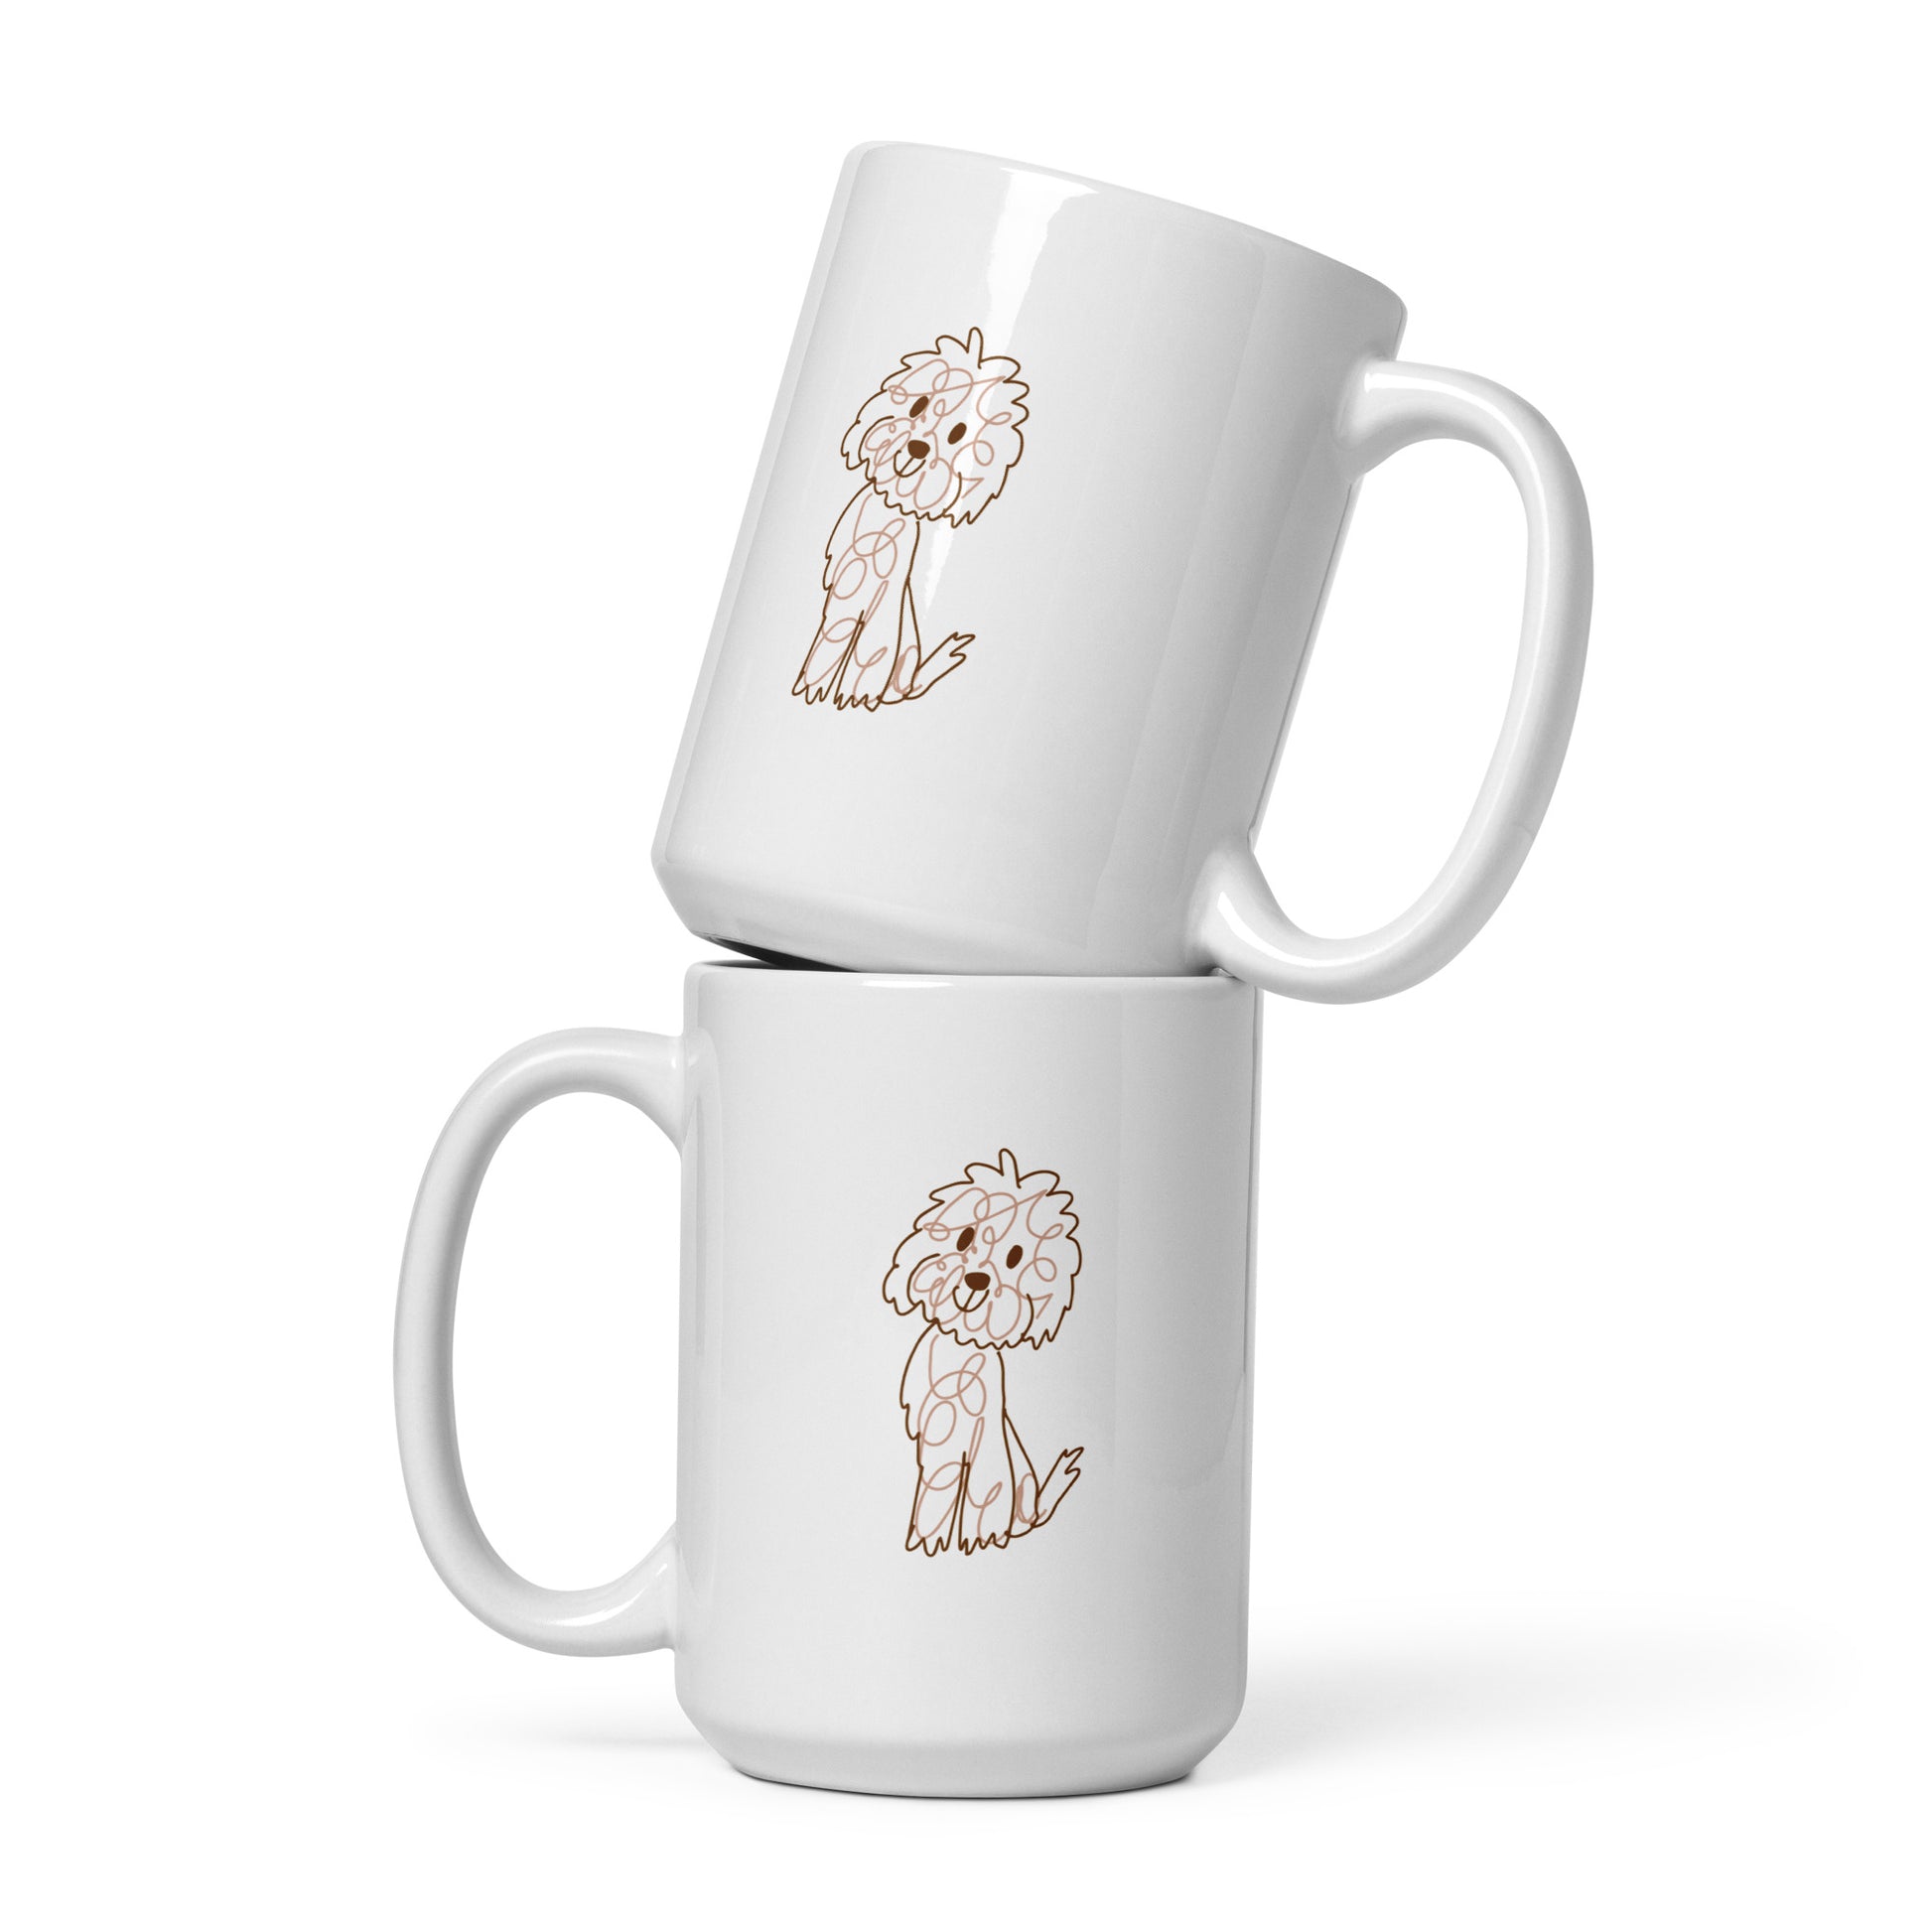 White ceramic coffee mug with cute doodle dog design